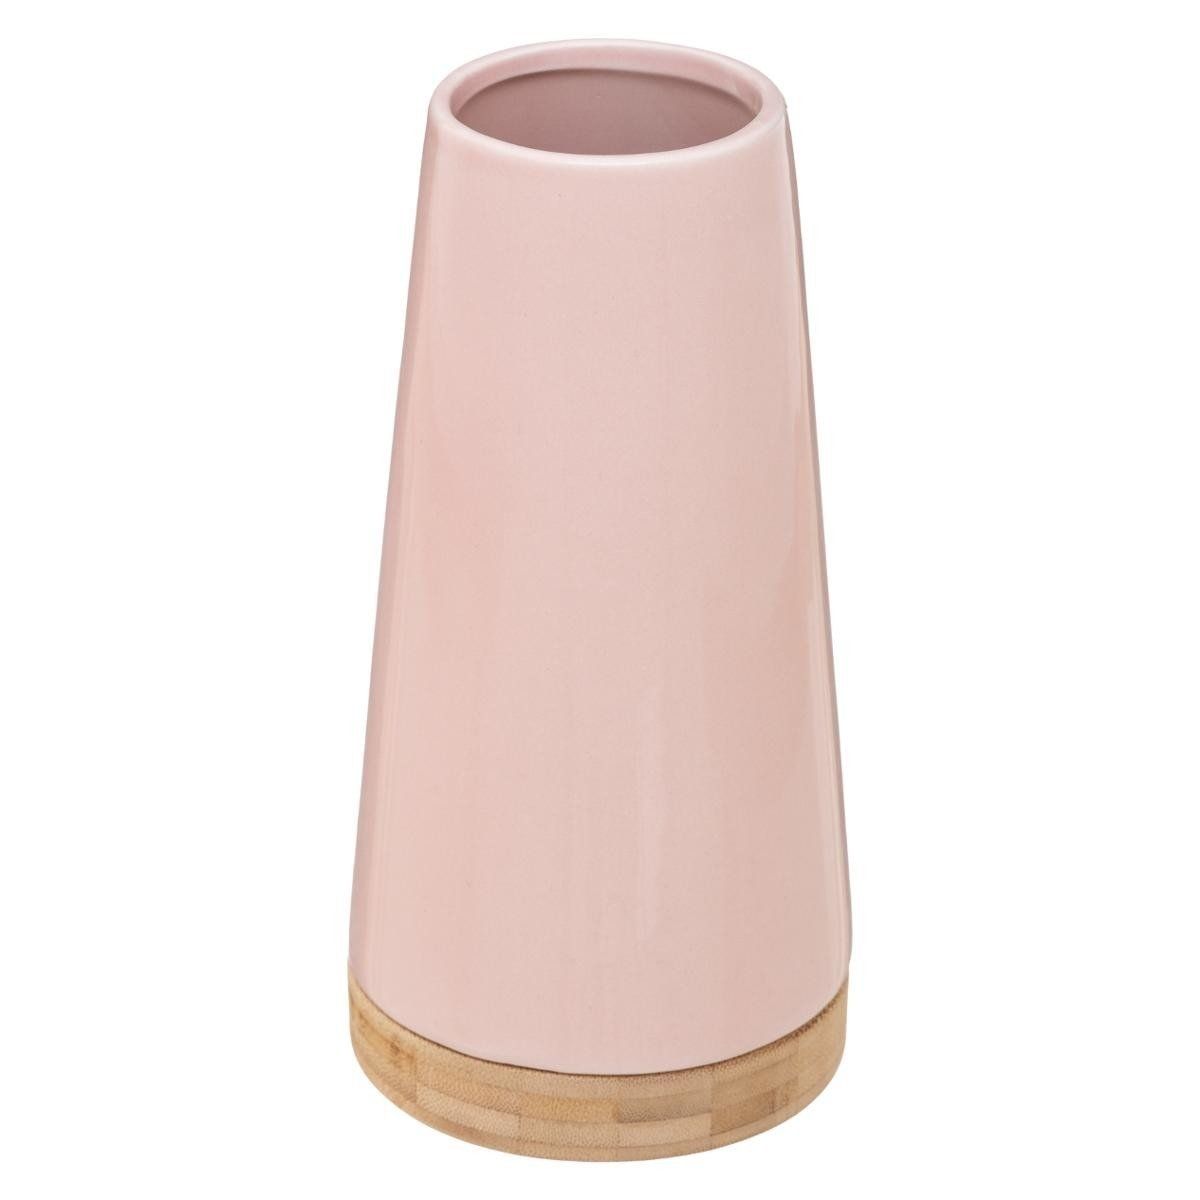 Atmosphera váza BAMBOO, kónická, 20 cm, růžová - EMAKO.CZ s.r.o.